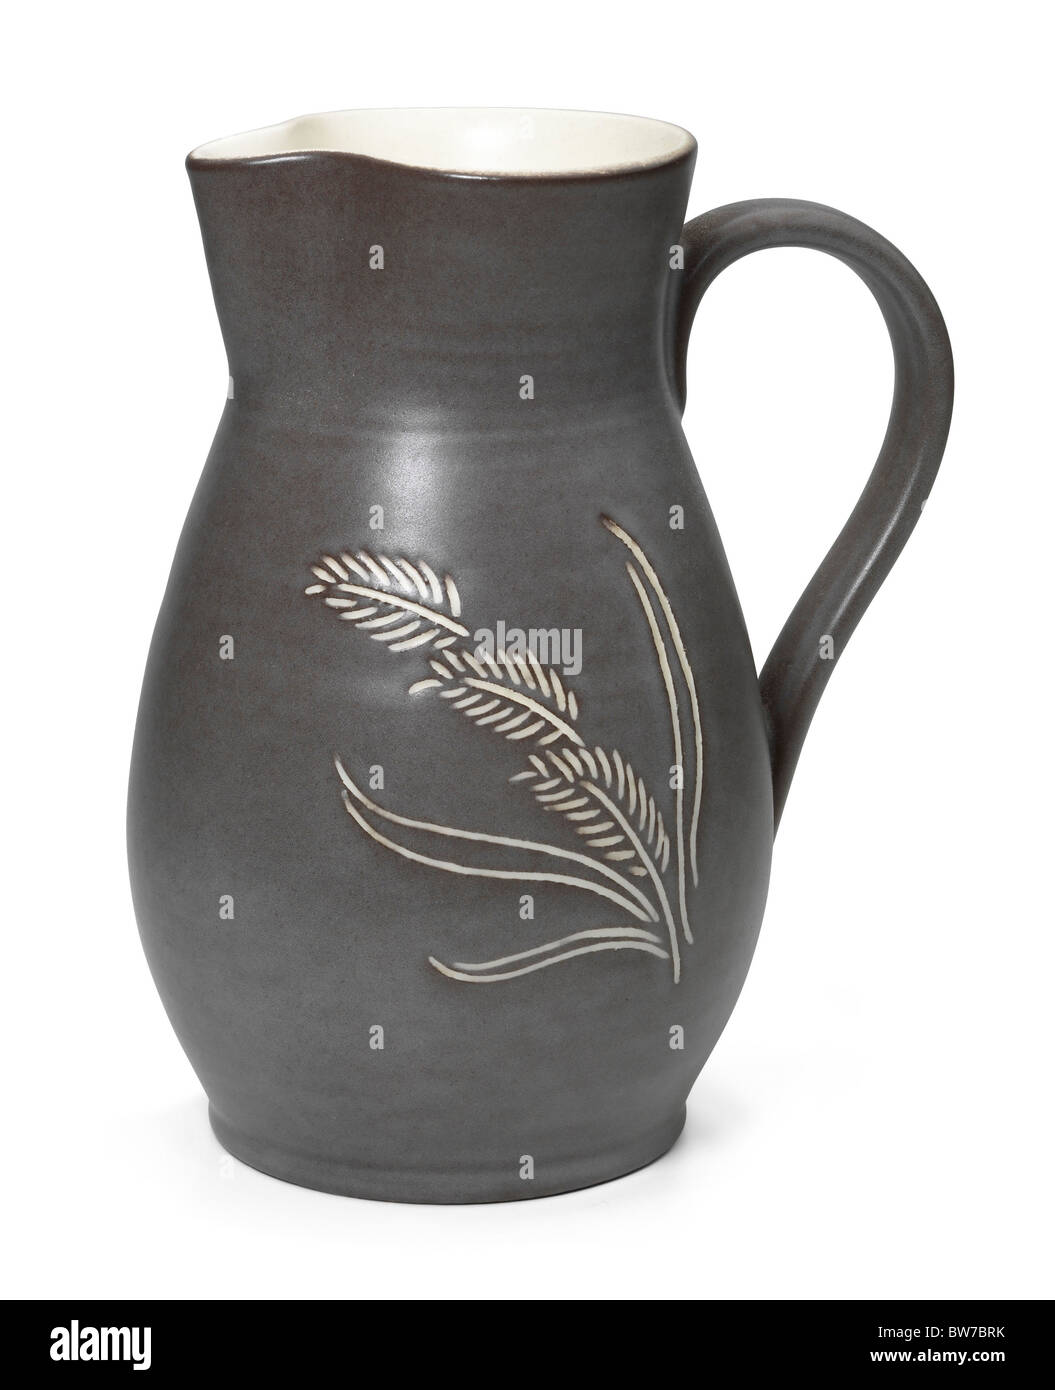 Poole pottery jug Stock Photo